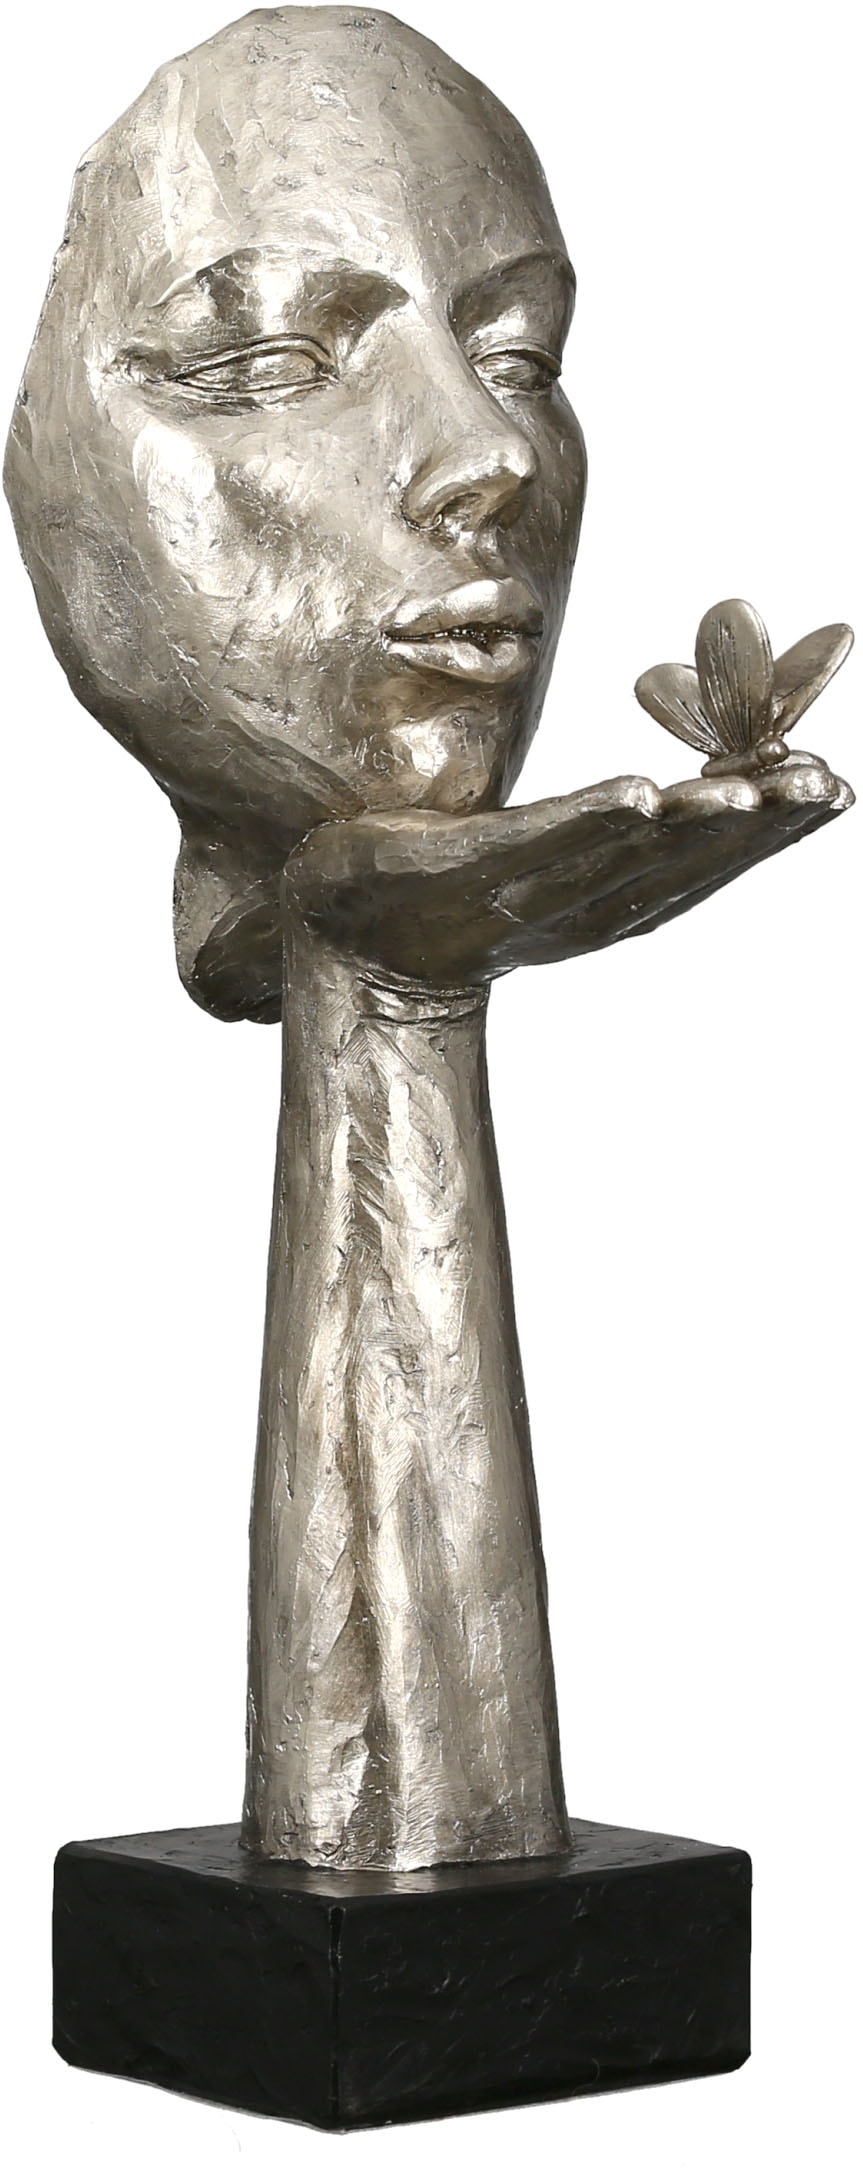 GILDE Dekofigur »Skulptur Desire, silberfarben, Polyresin kaufen antikfinish«